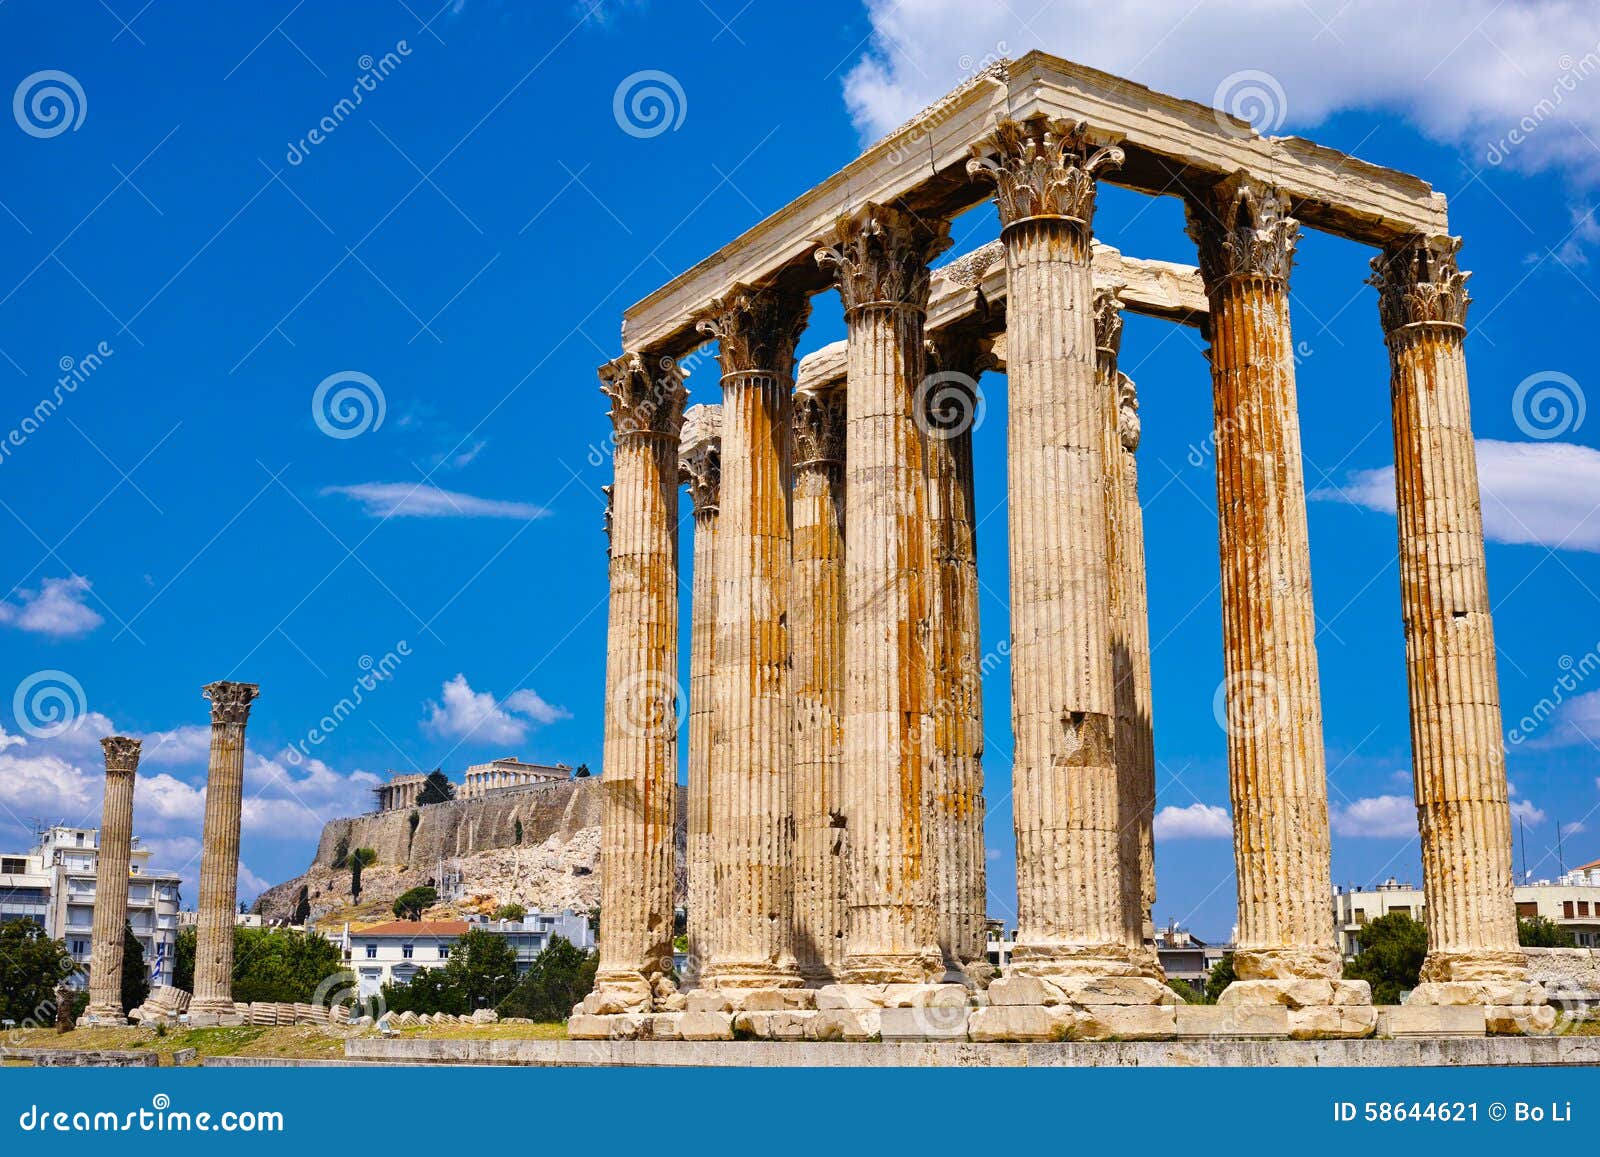 temple of zeus, olympia, greece